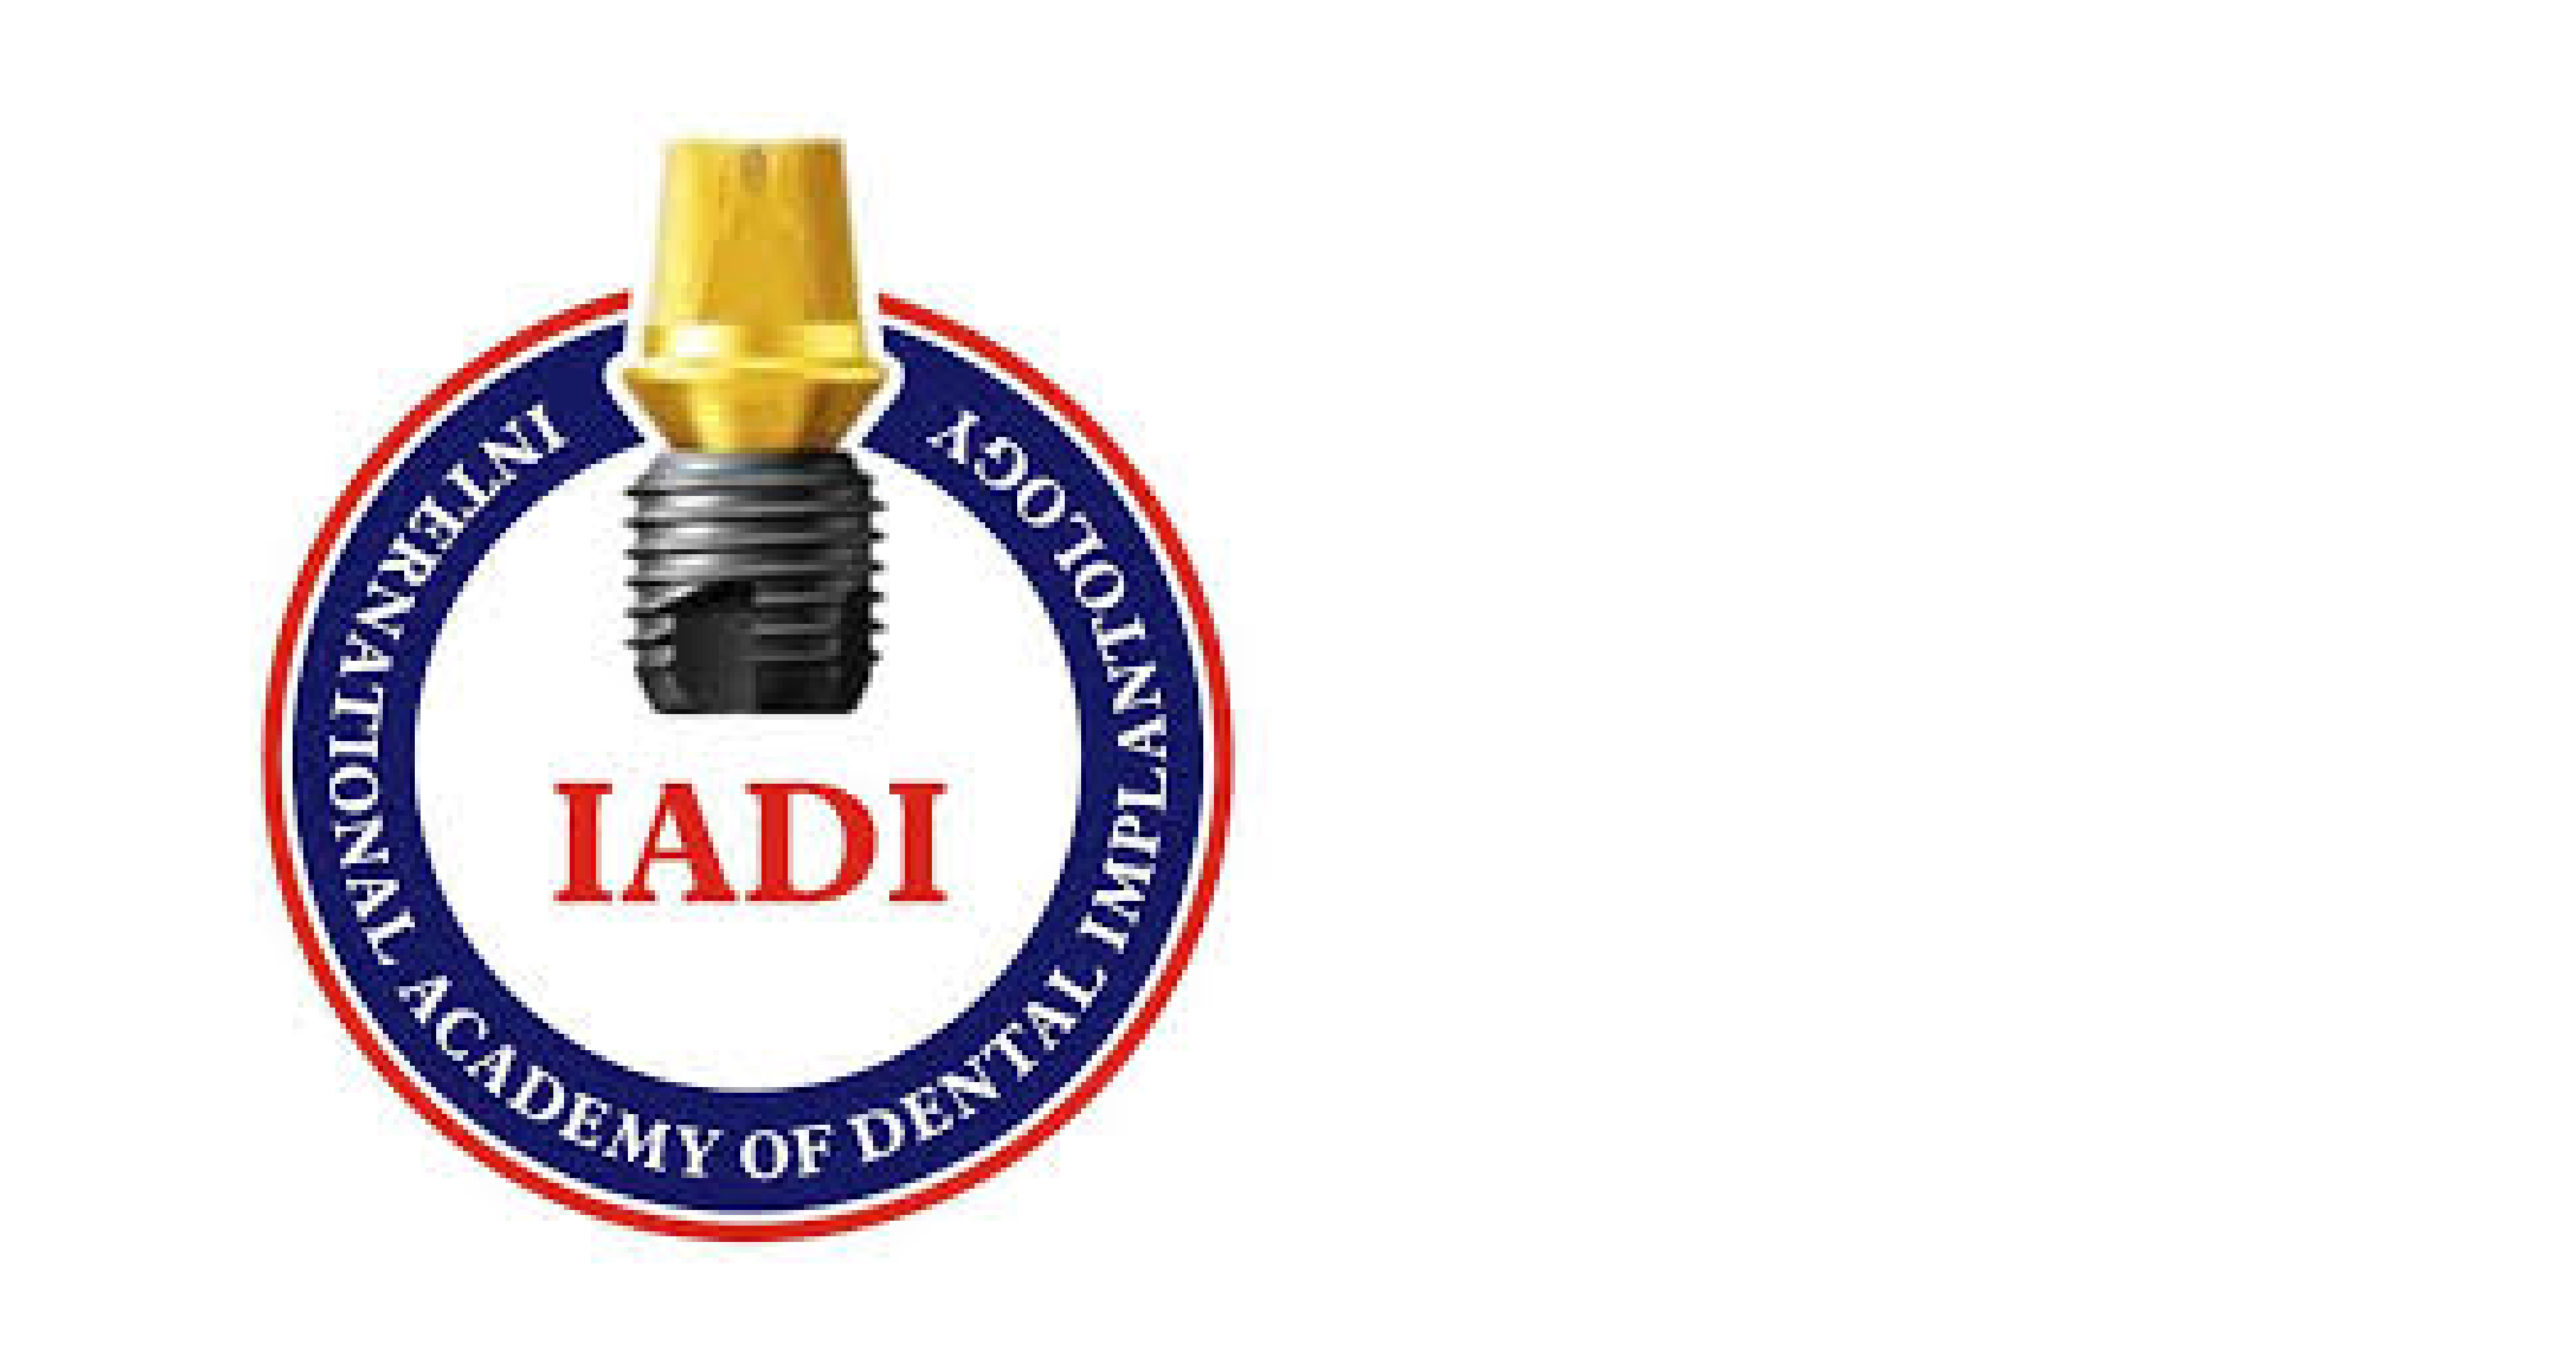 International Academy of Dental Implantology (IADI)